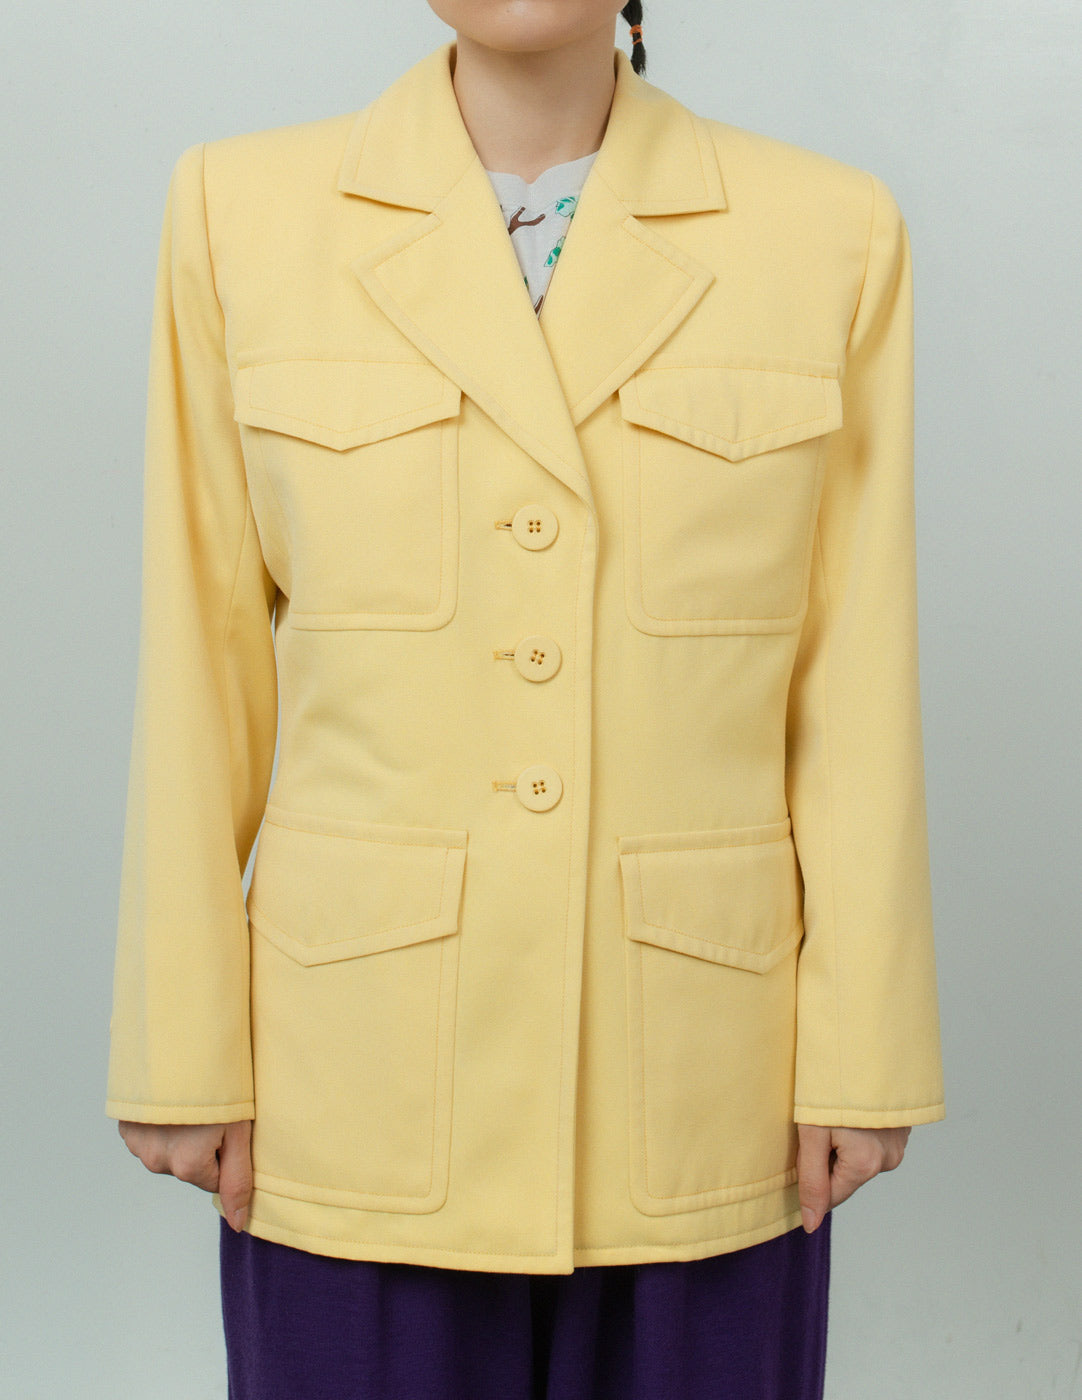 Yves Saint Laurent vintage cream yellow Safari blazer front detail